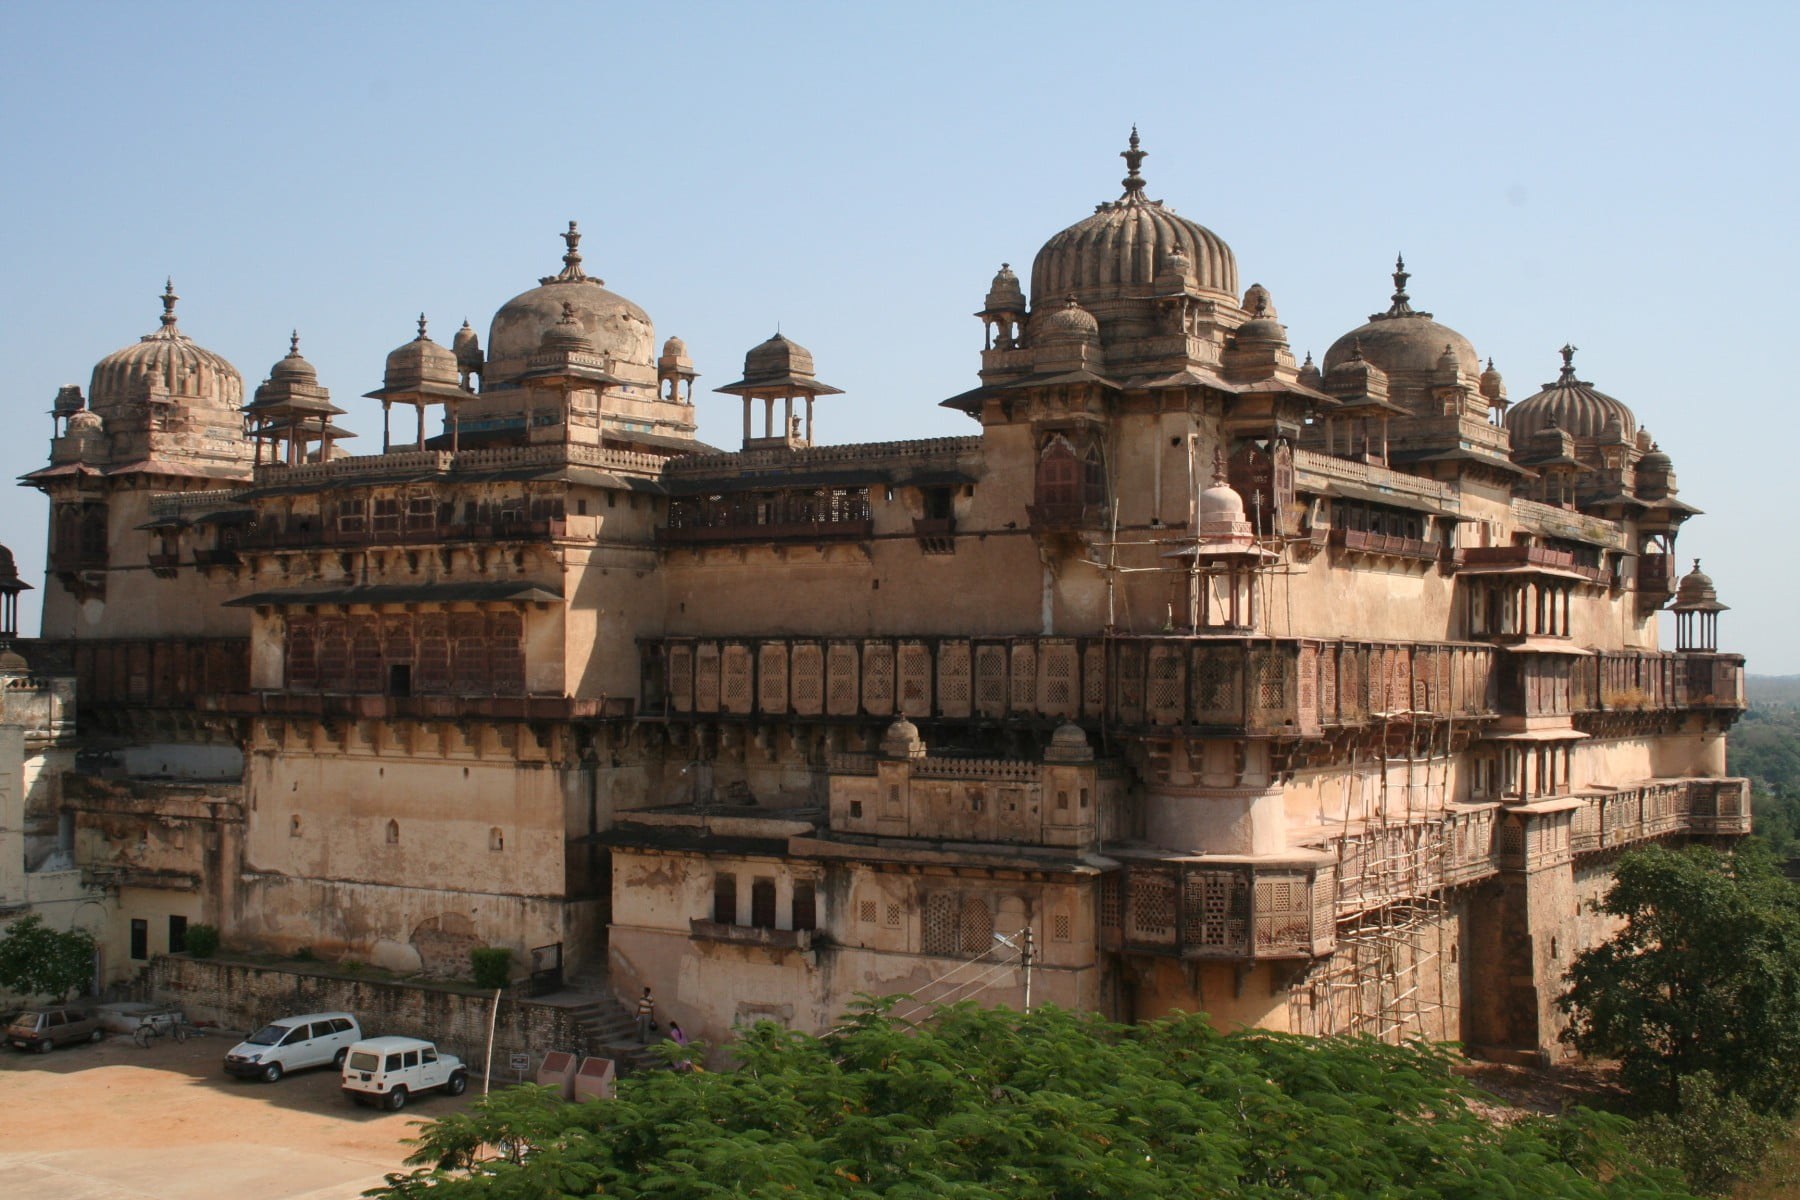 Fort world. Форт Орчхи Индия. Джханси Индия город. Архитектура древней Индии. Древняя Индия Тадж Махал.